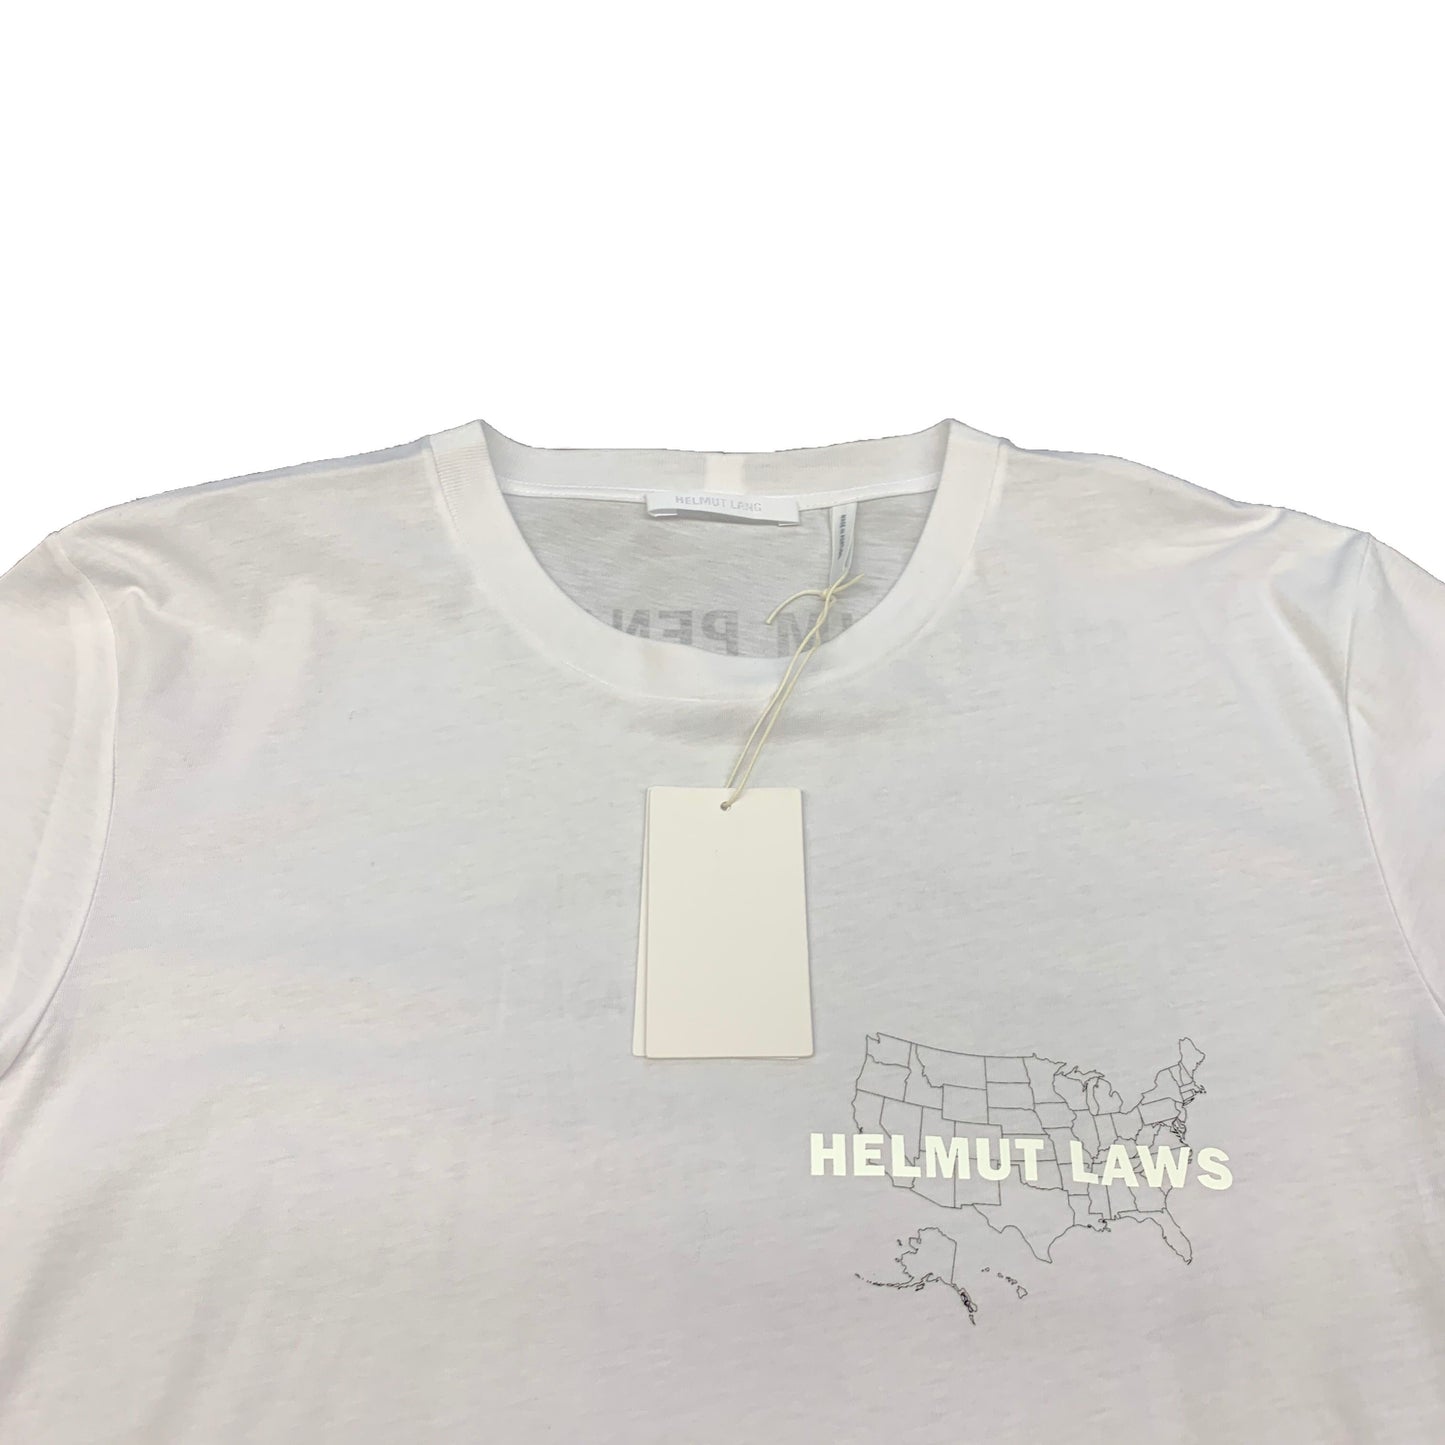 Helmut Lang Law Tee